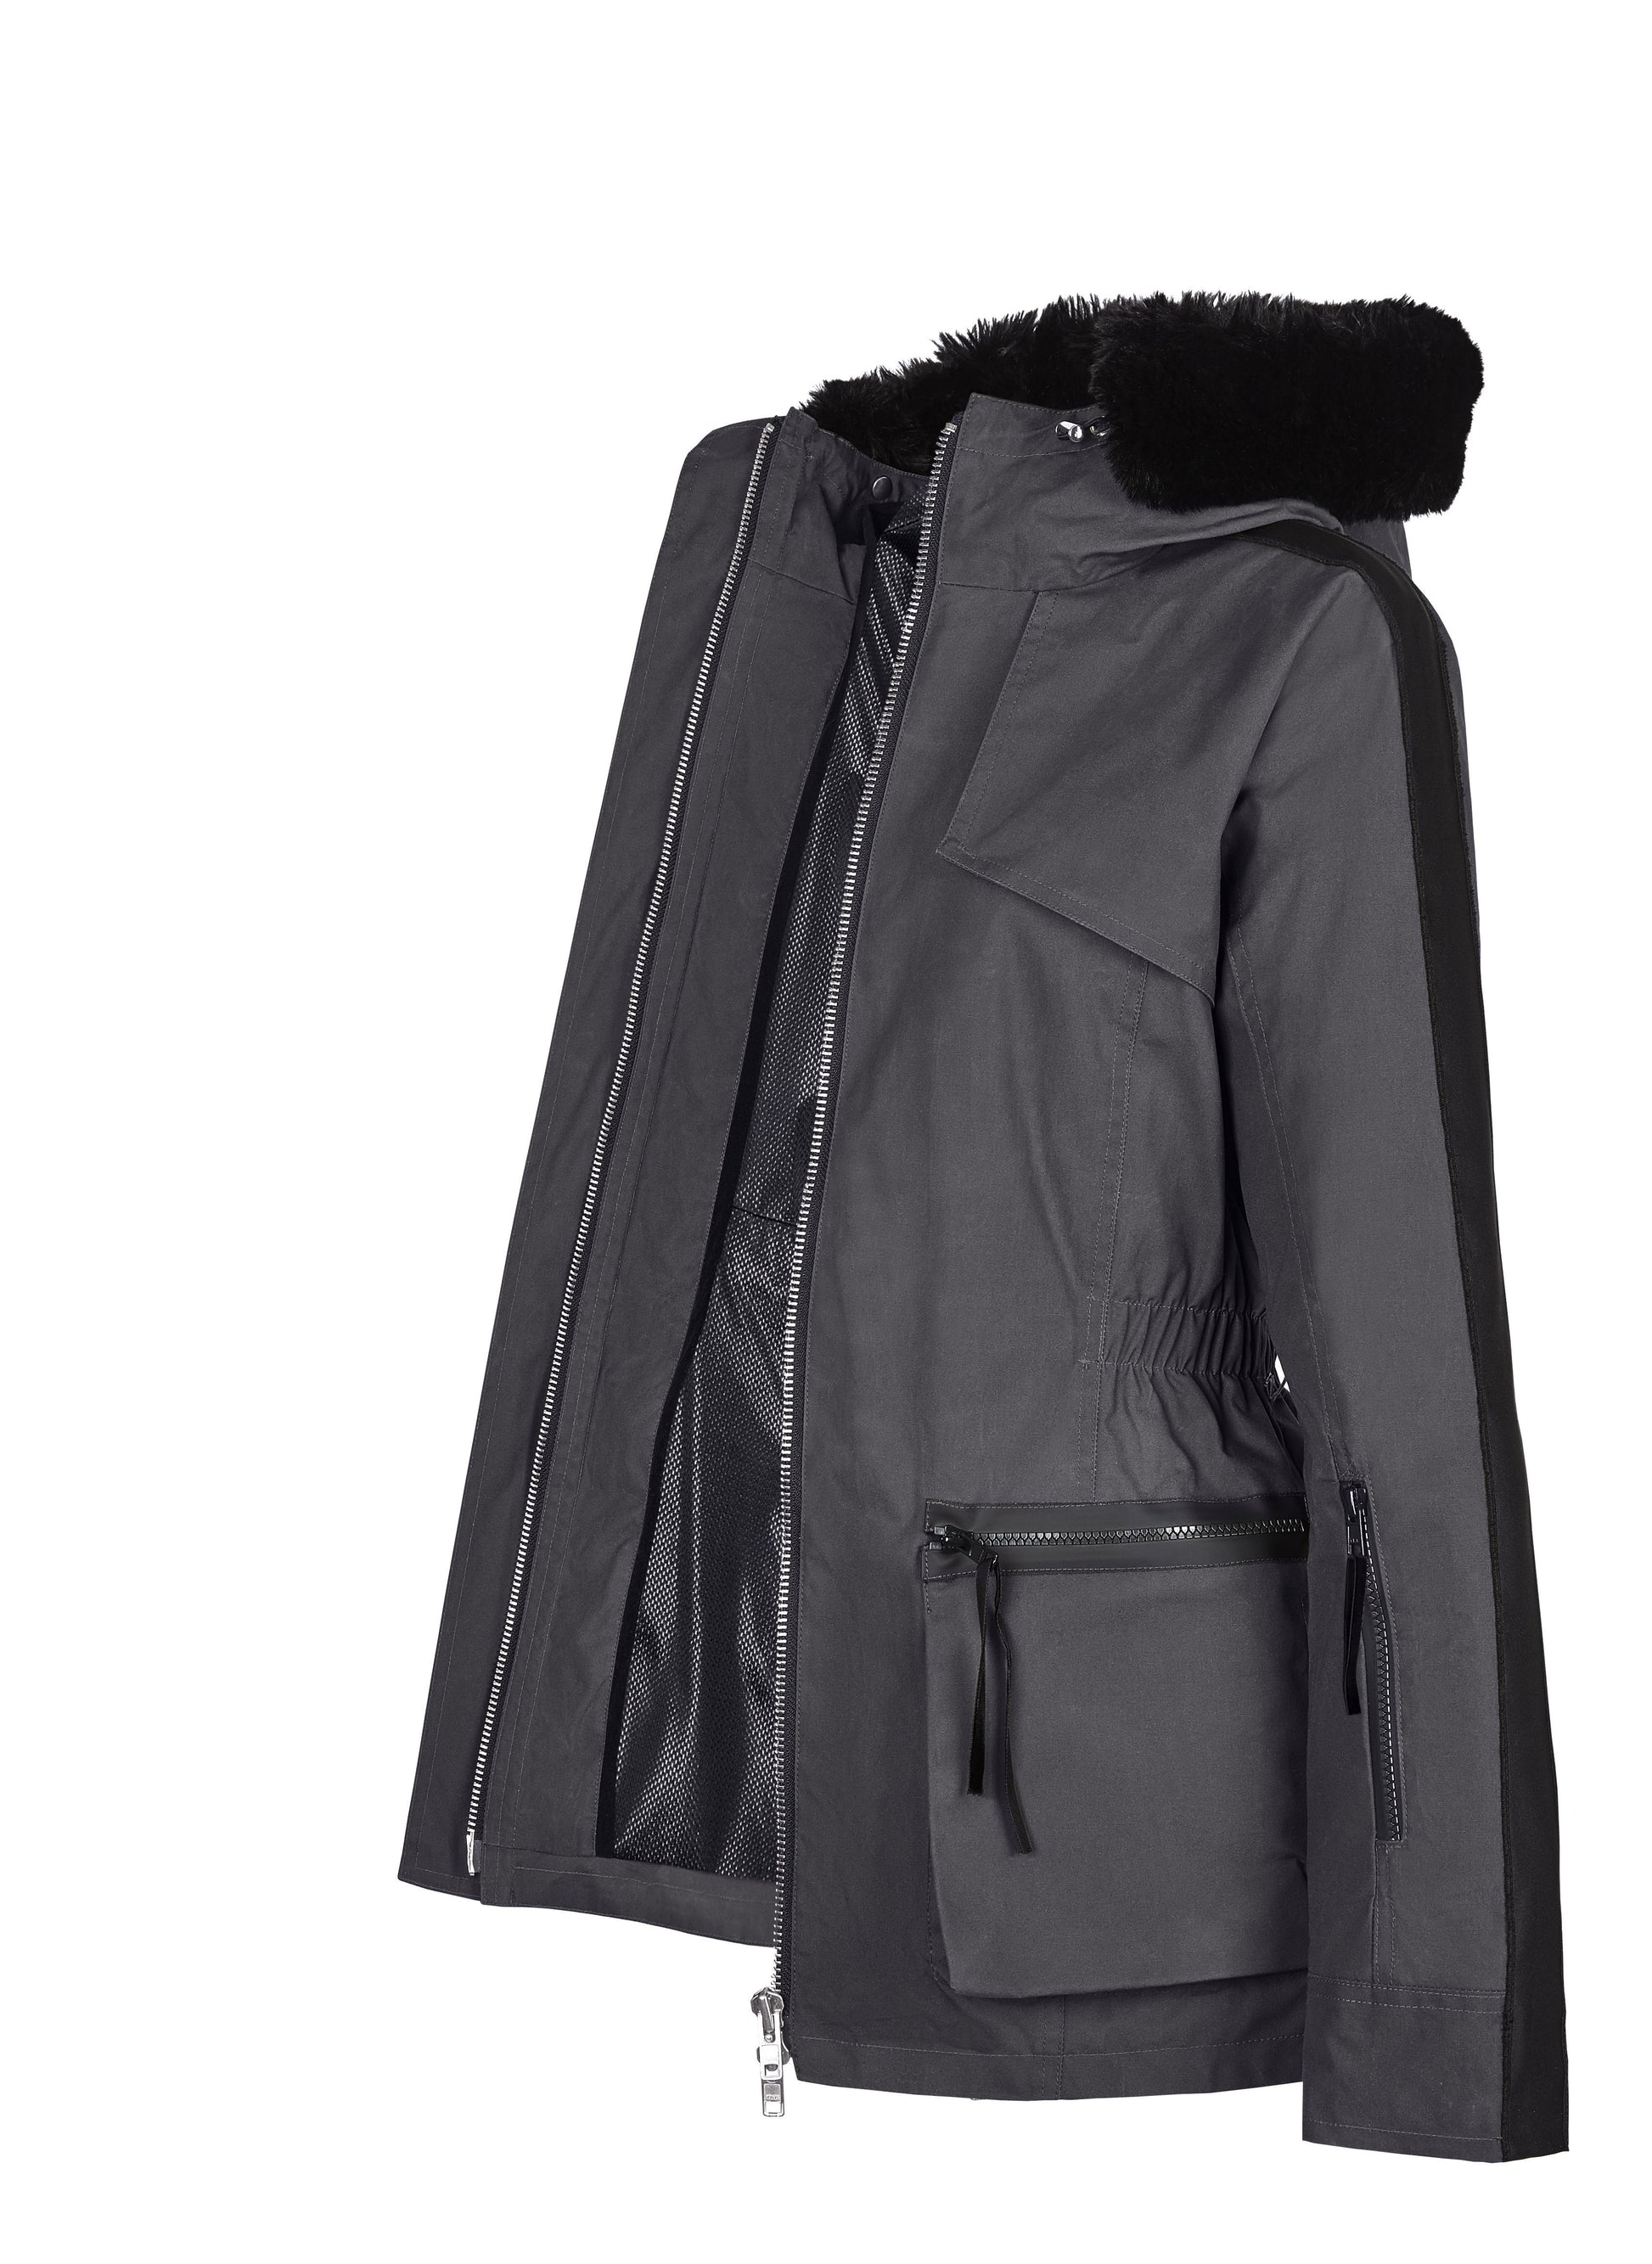 Wax Parka, Wax Jacket with Fur Trim, ski pass, belted, British Made Coat